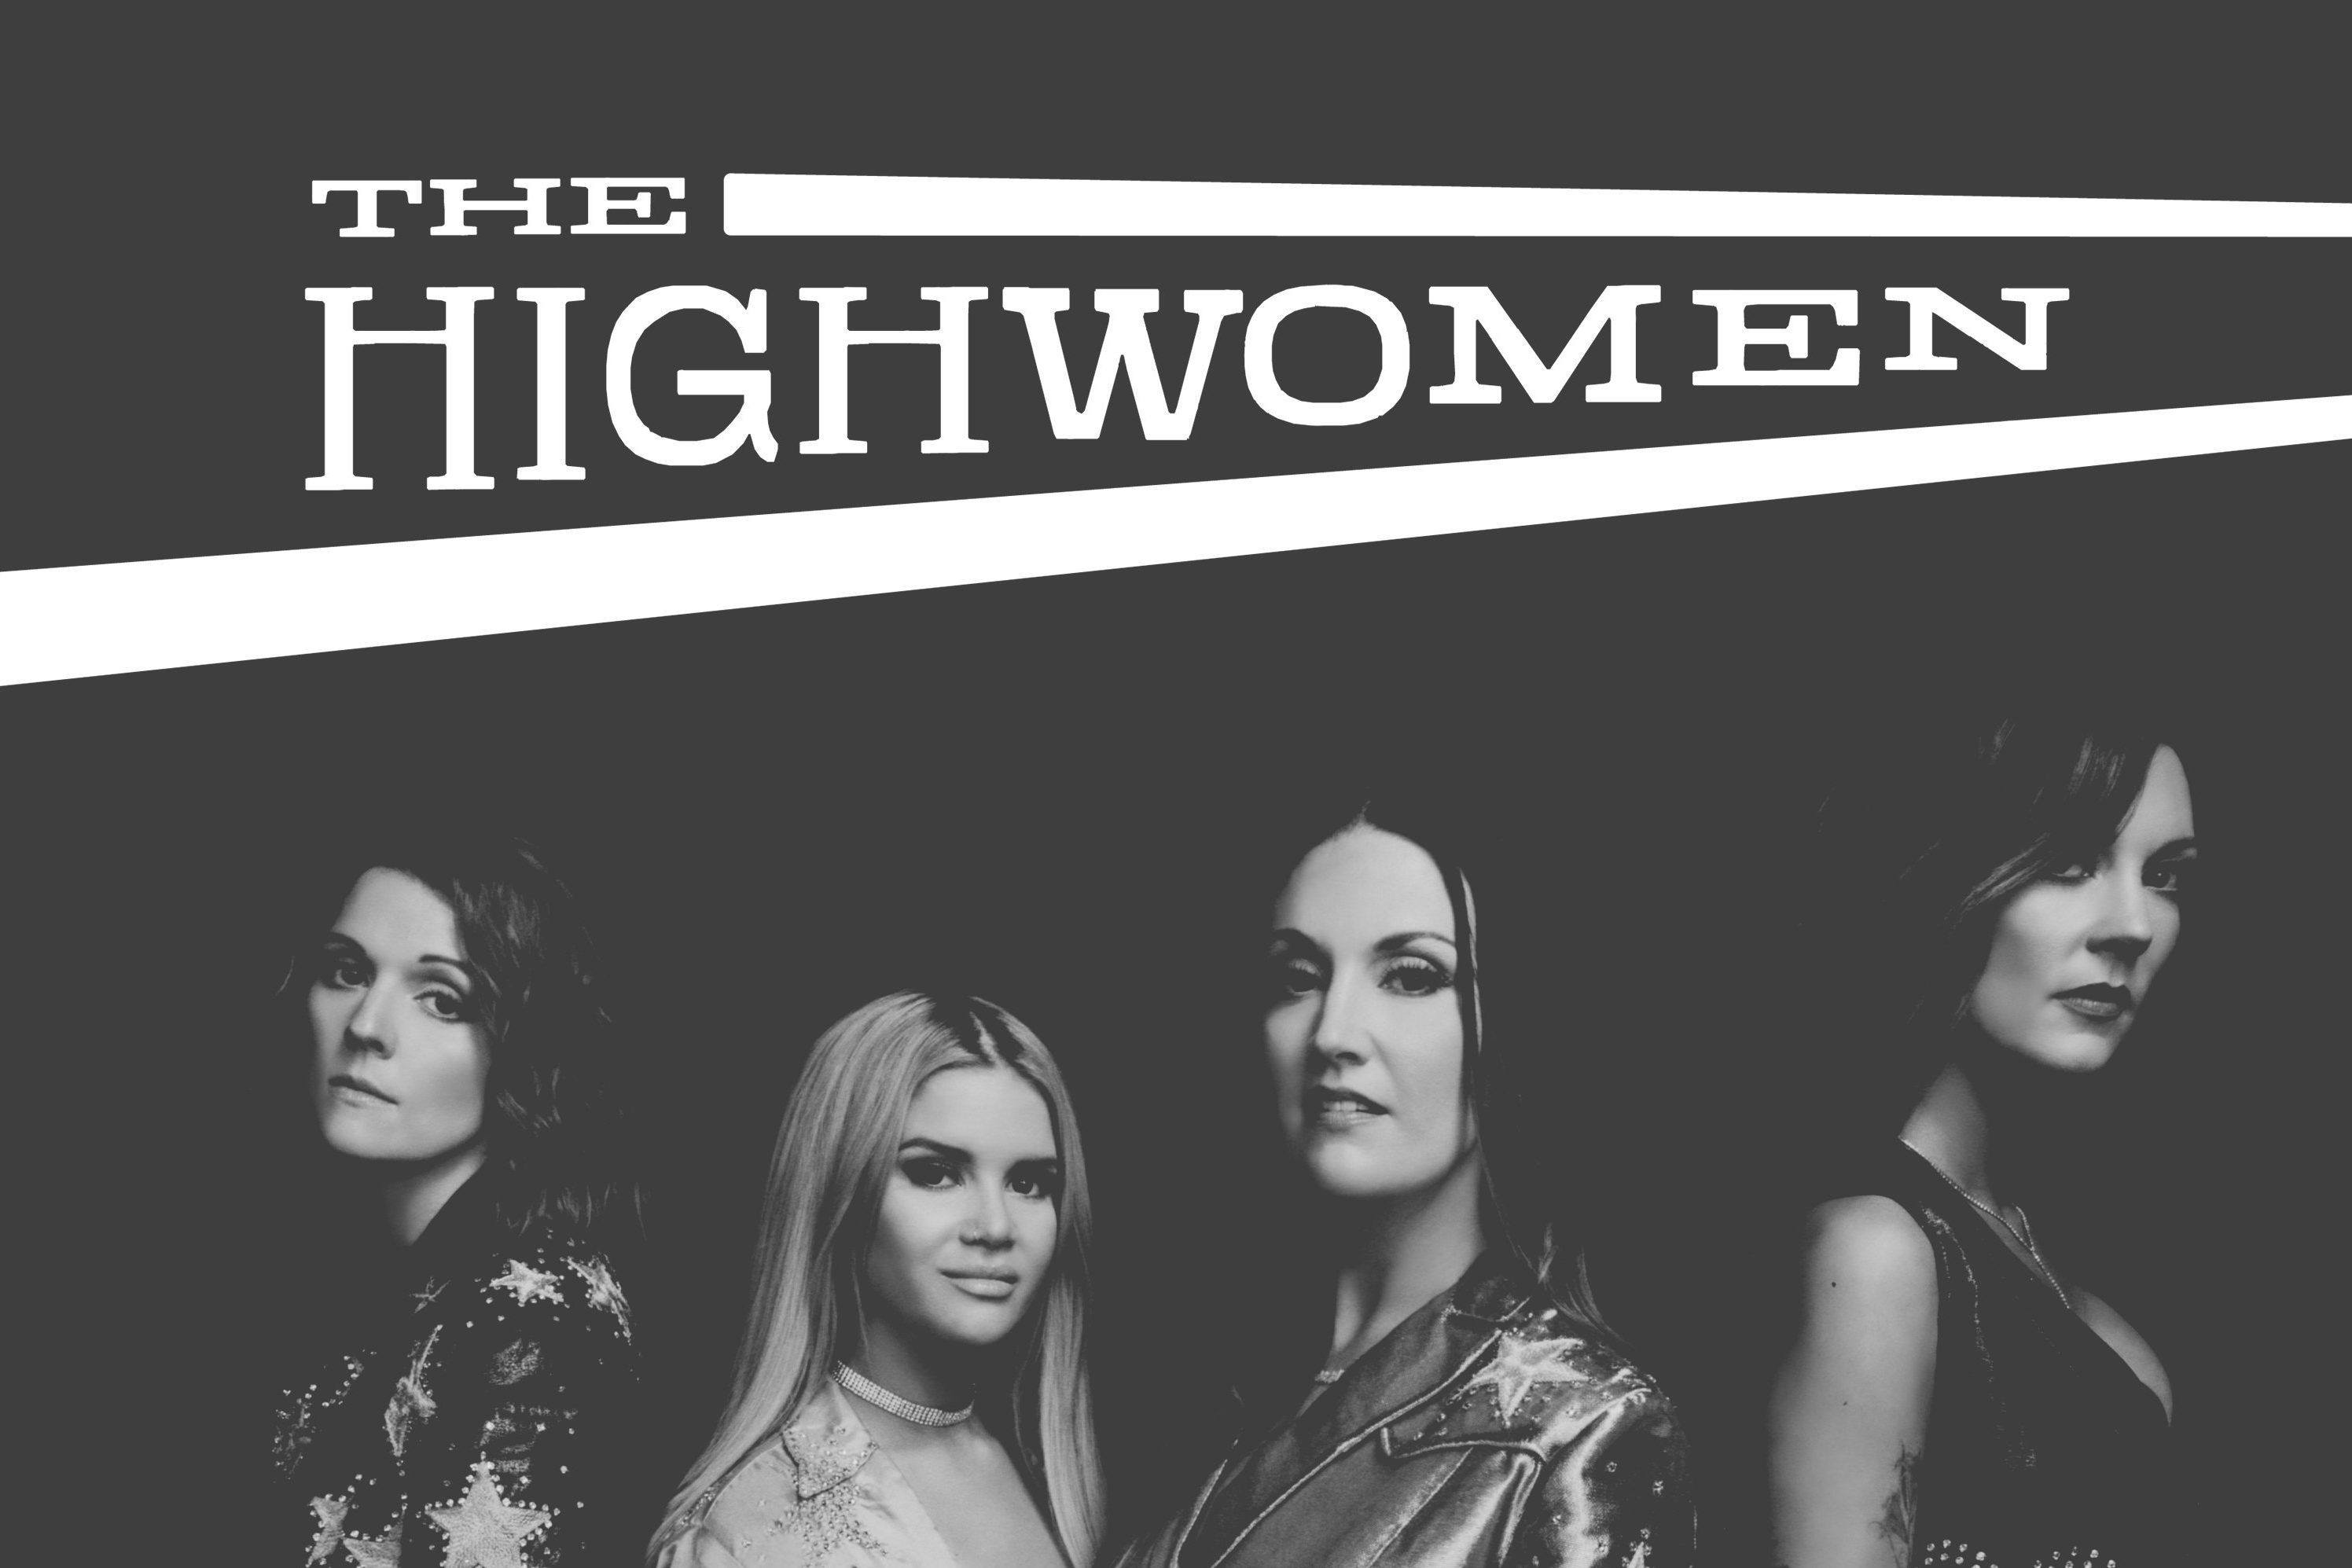 Nashville make room – The Highwomen are coming through